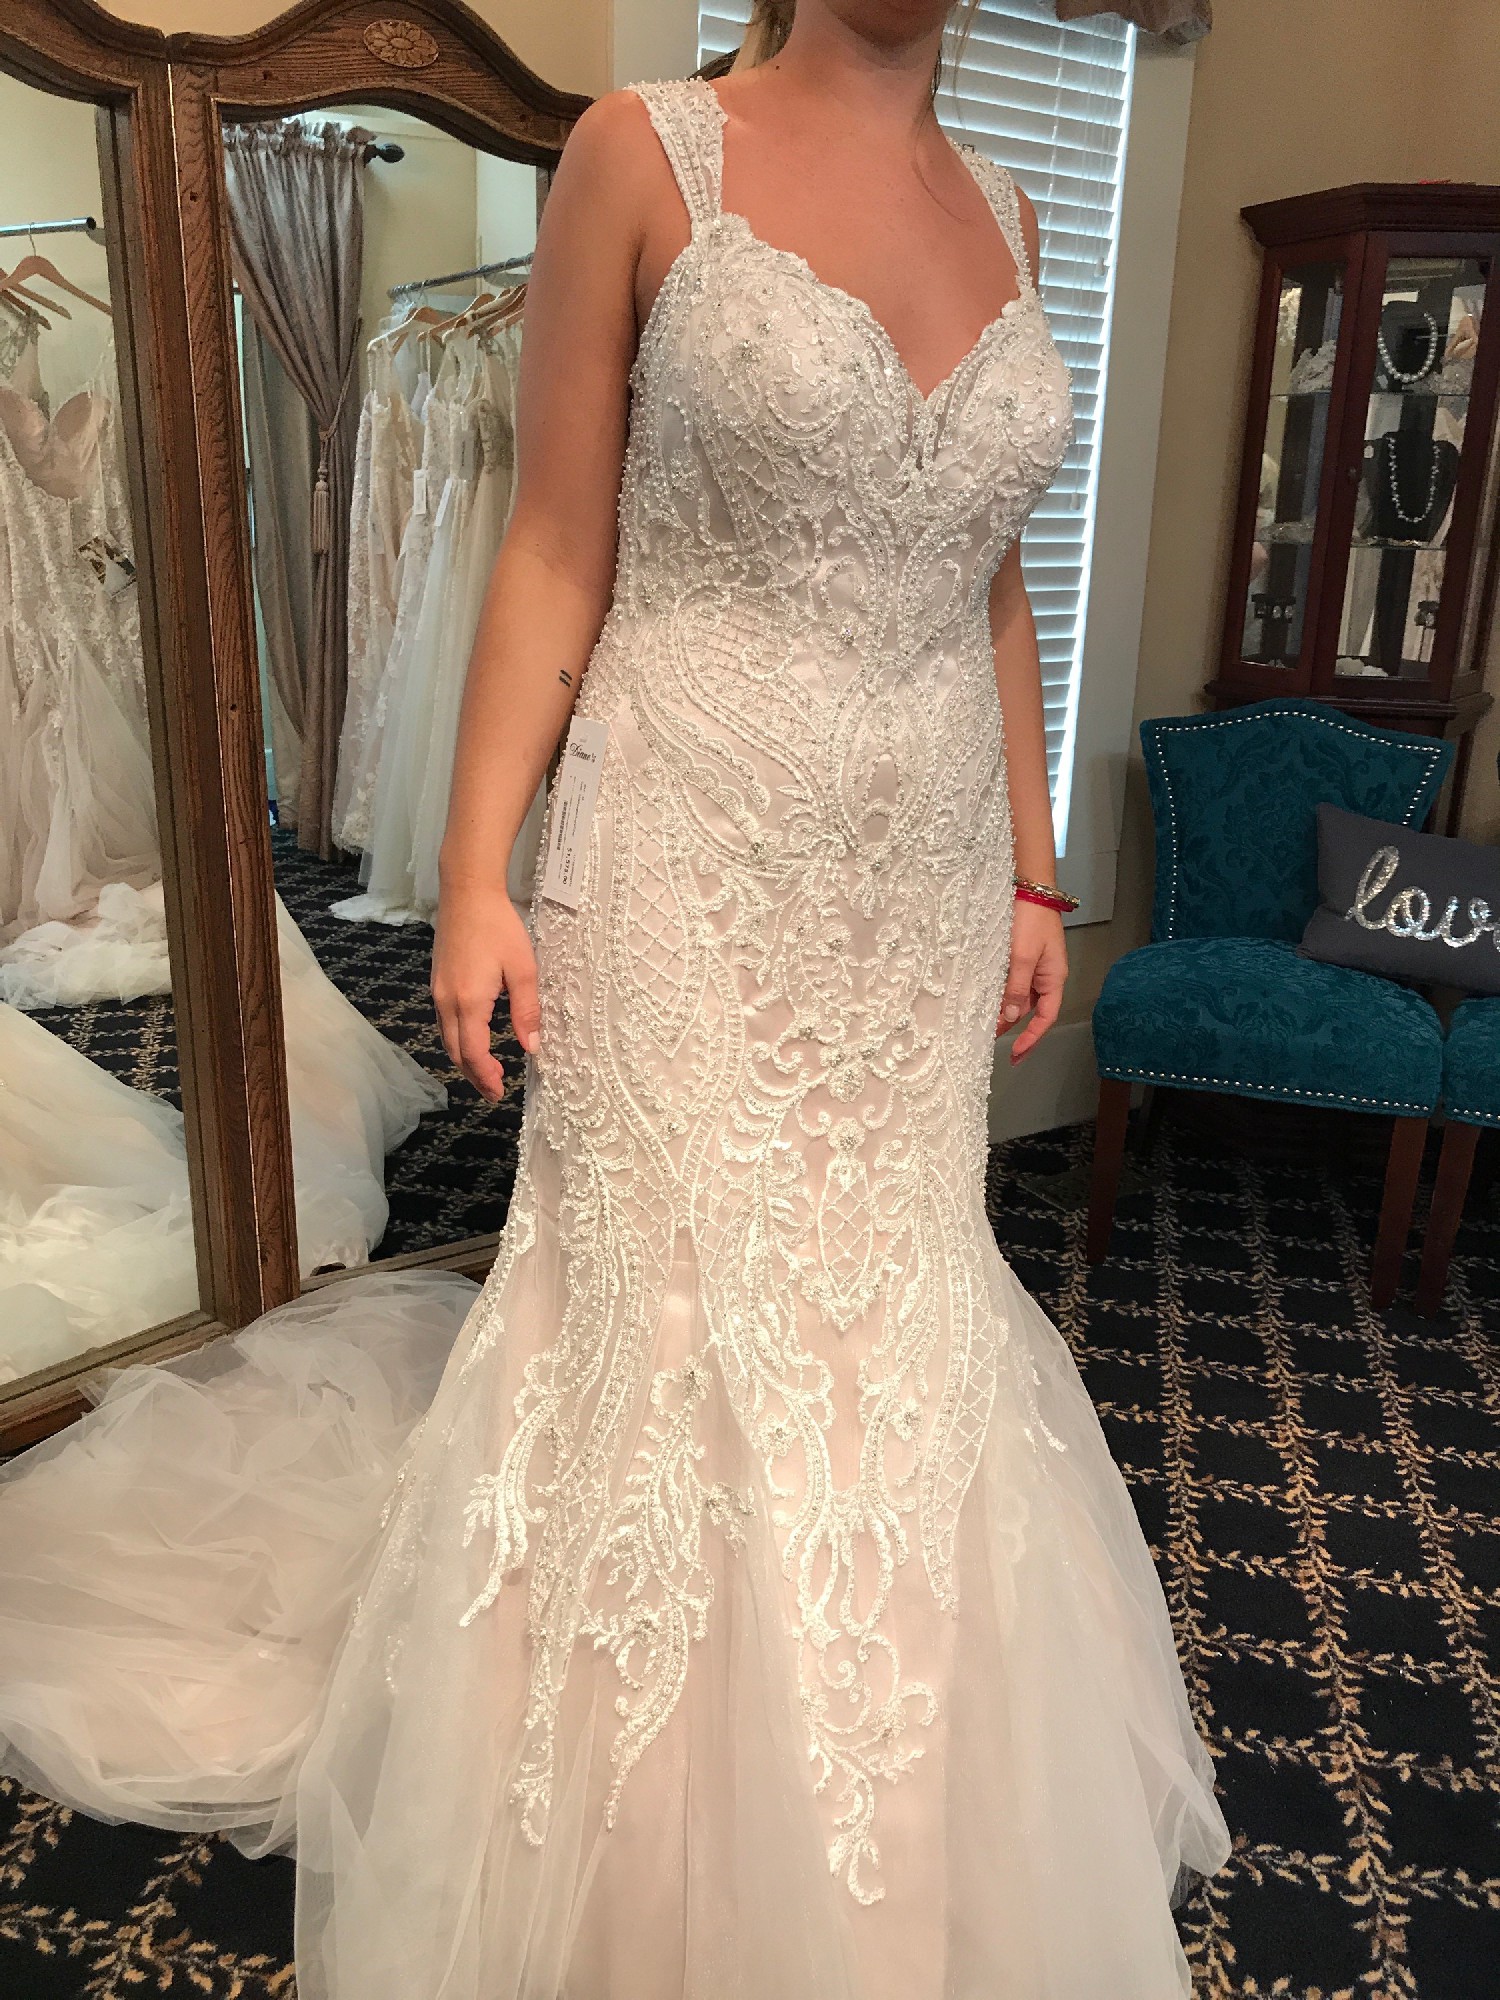  Allure  Bridals  9463 New Wedding  Dress  on Sale 55 Off 